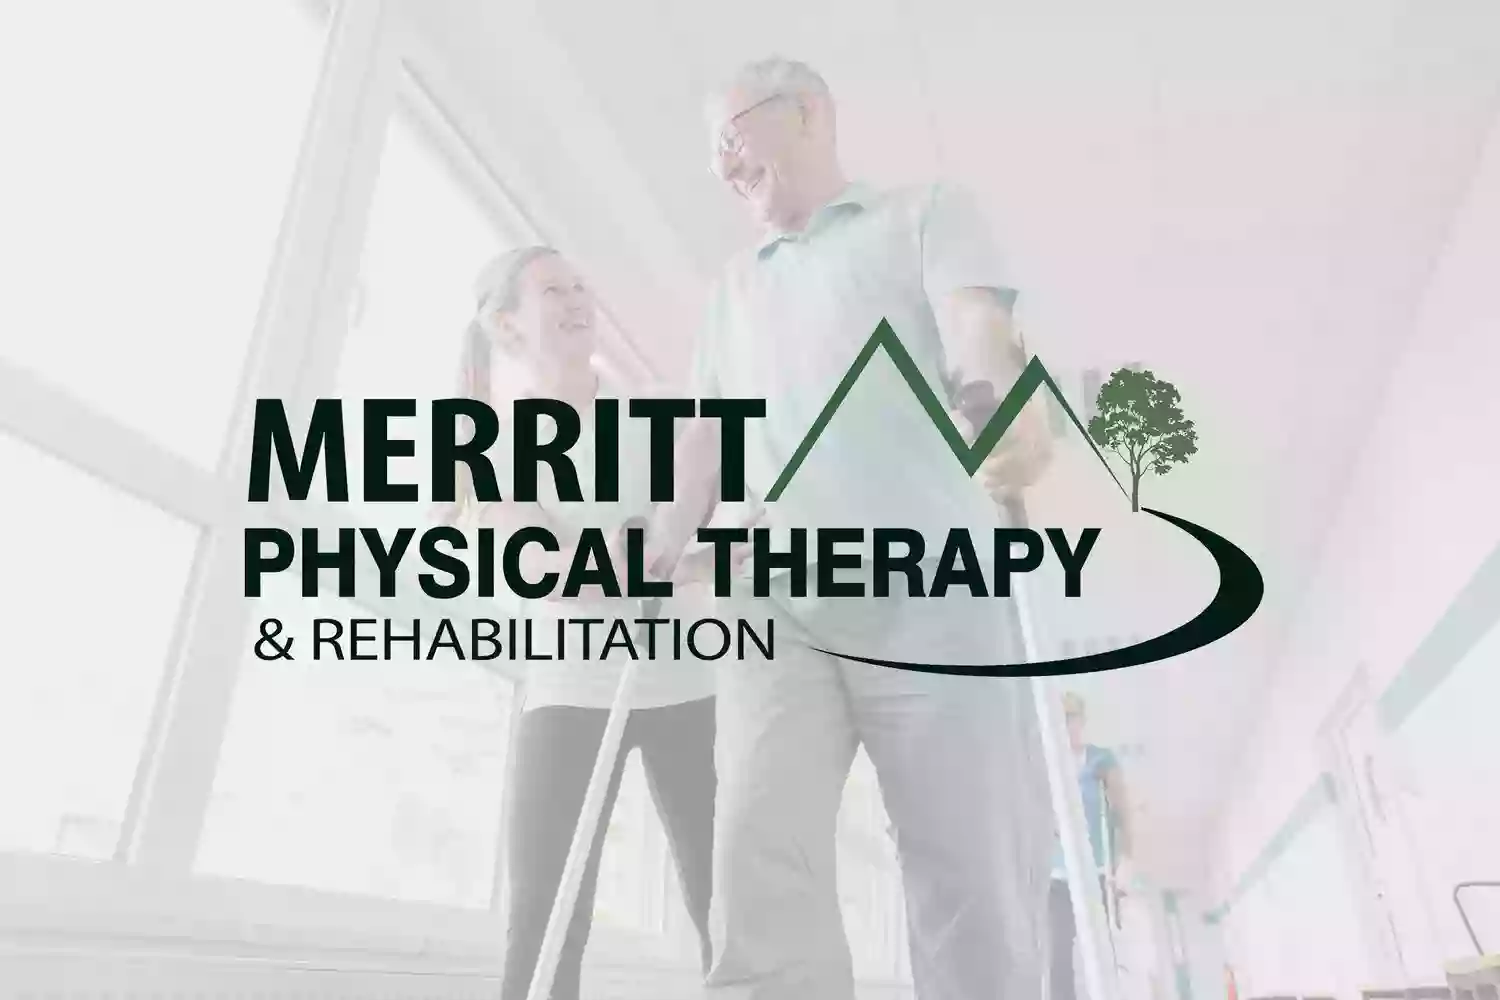 Merritt Physical Therapy & Rehabilitation